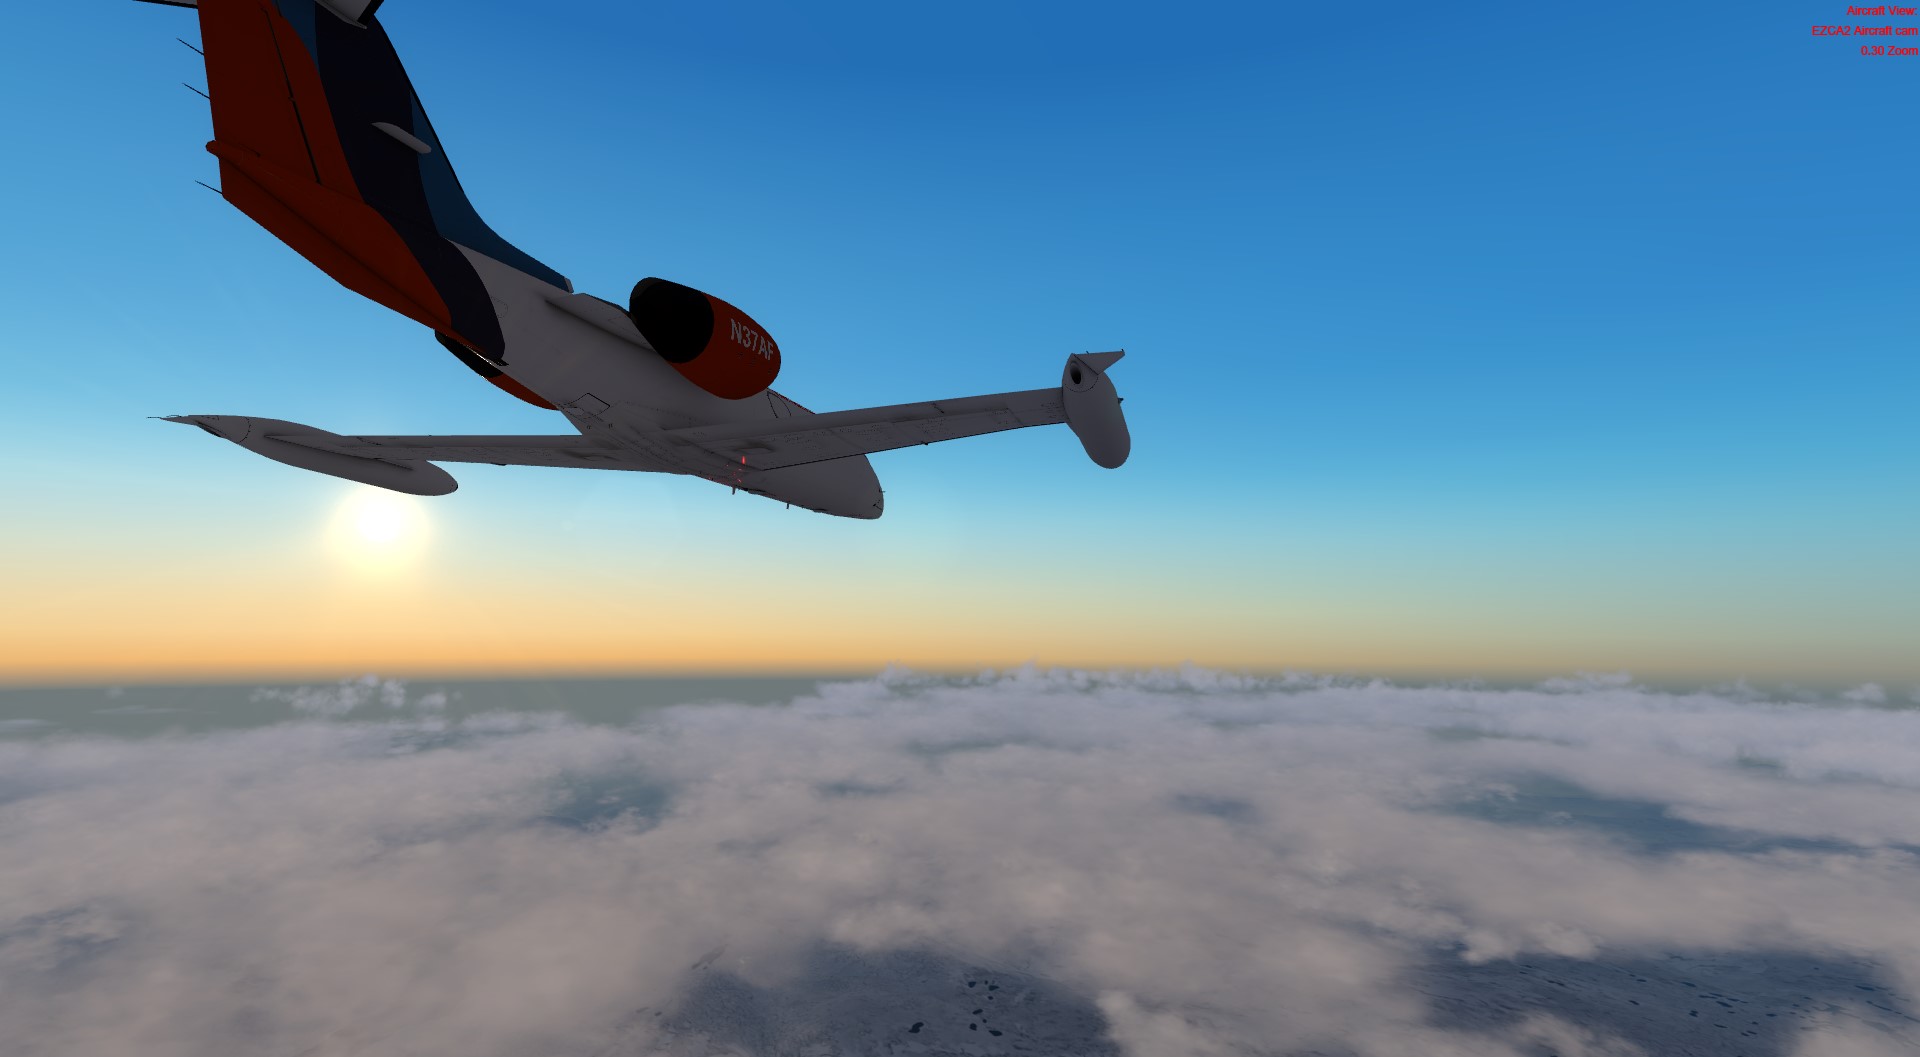 Flysimware – Learjet 35A 评测与冰岛送货之旅-3760 